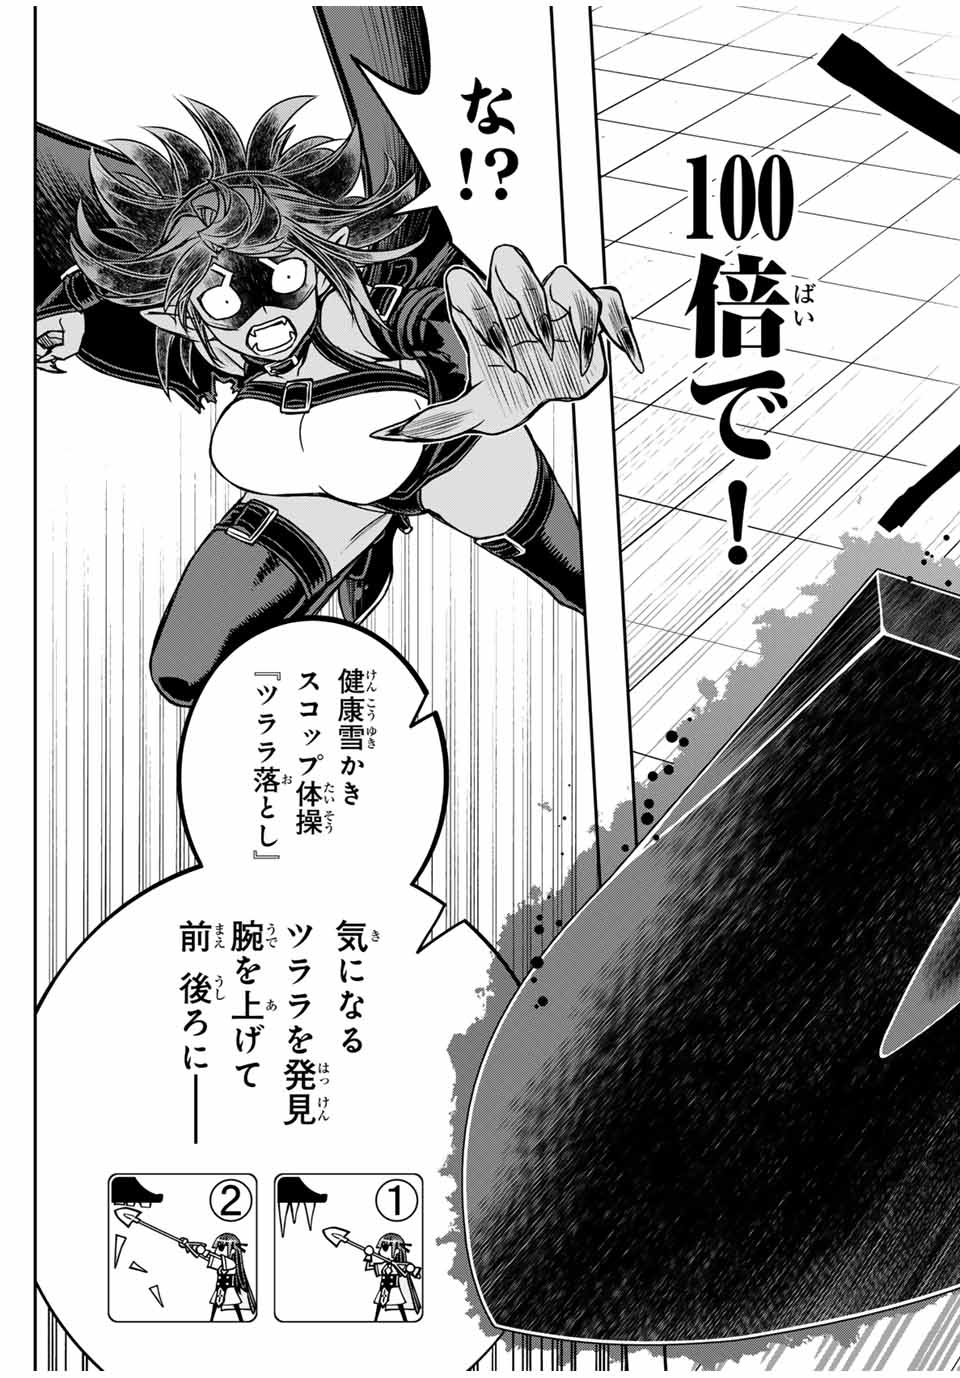 Nengan no Akuyaku Reijou (Last Boss) no Karada wo Teniiretazo!  - Chapter 27 - Page 11